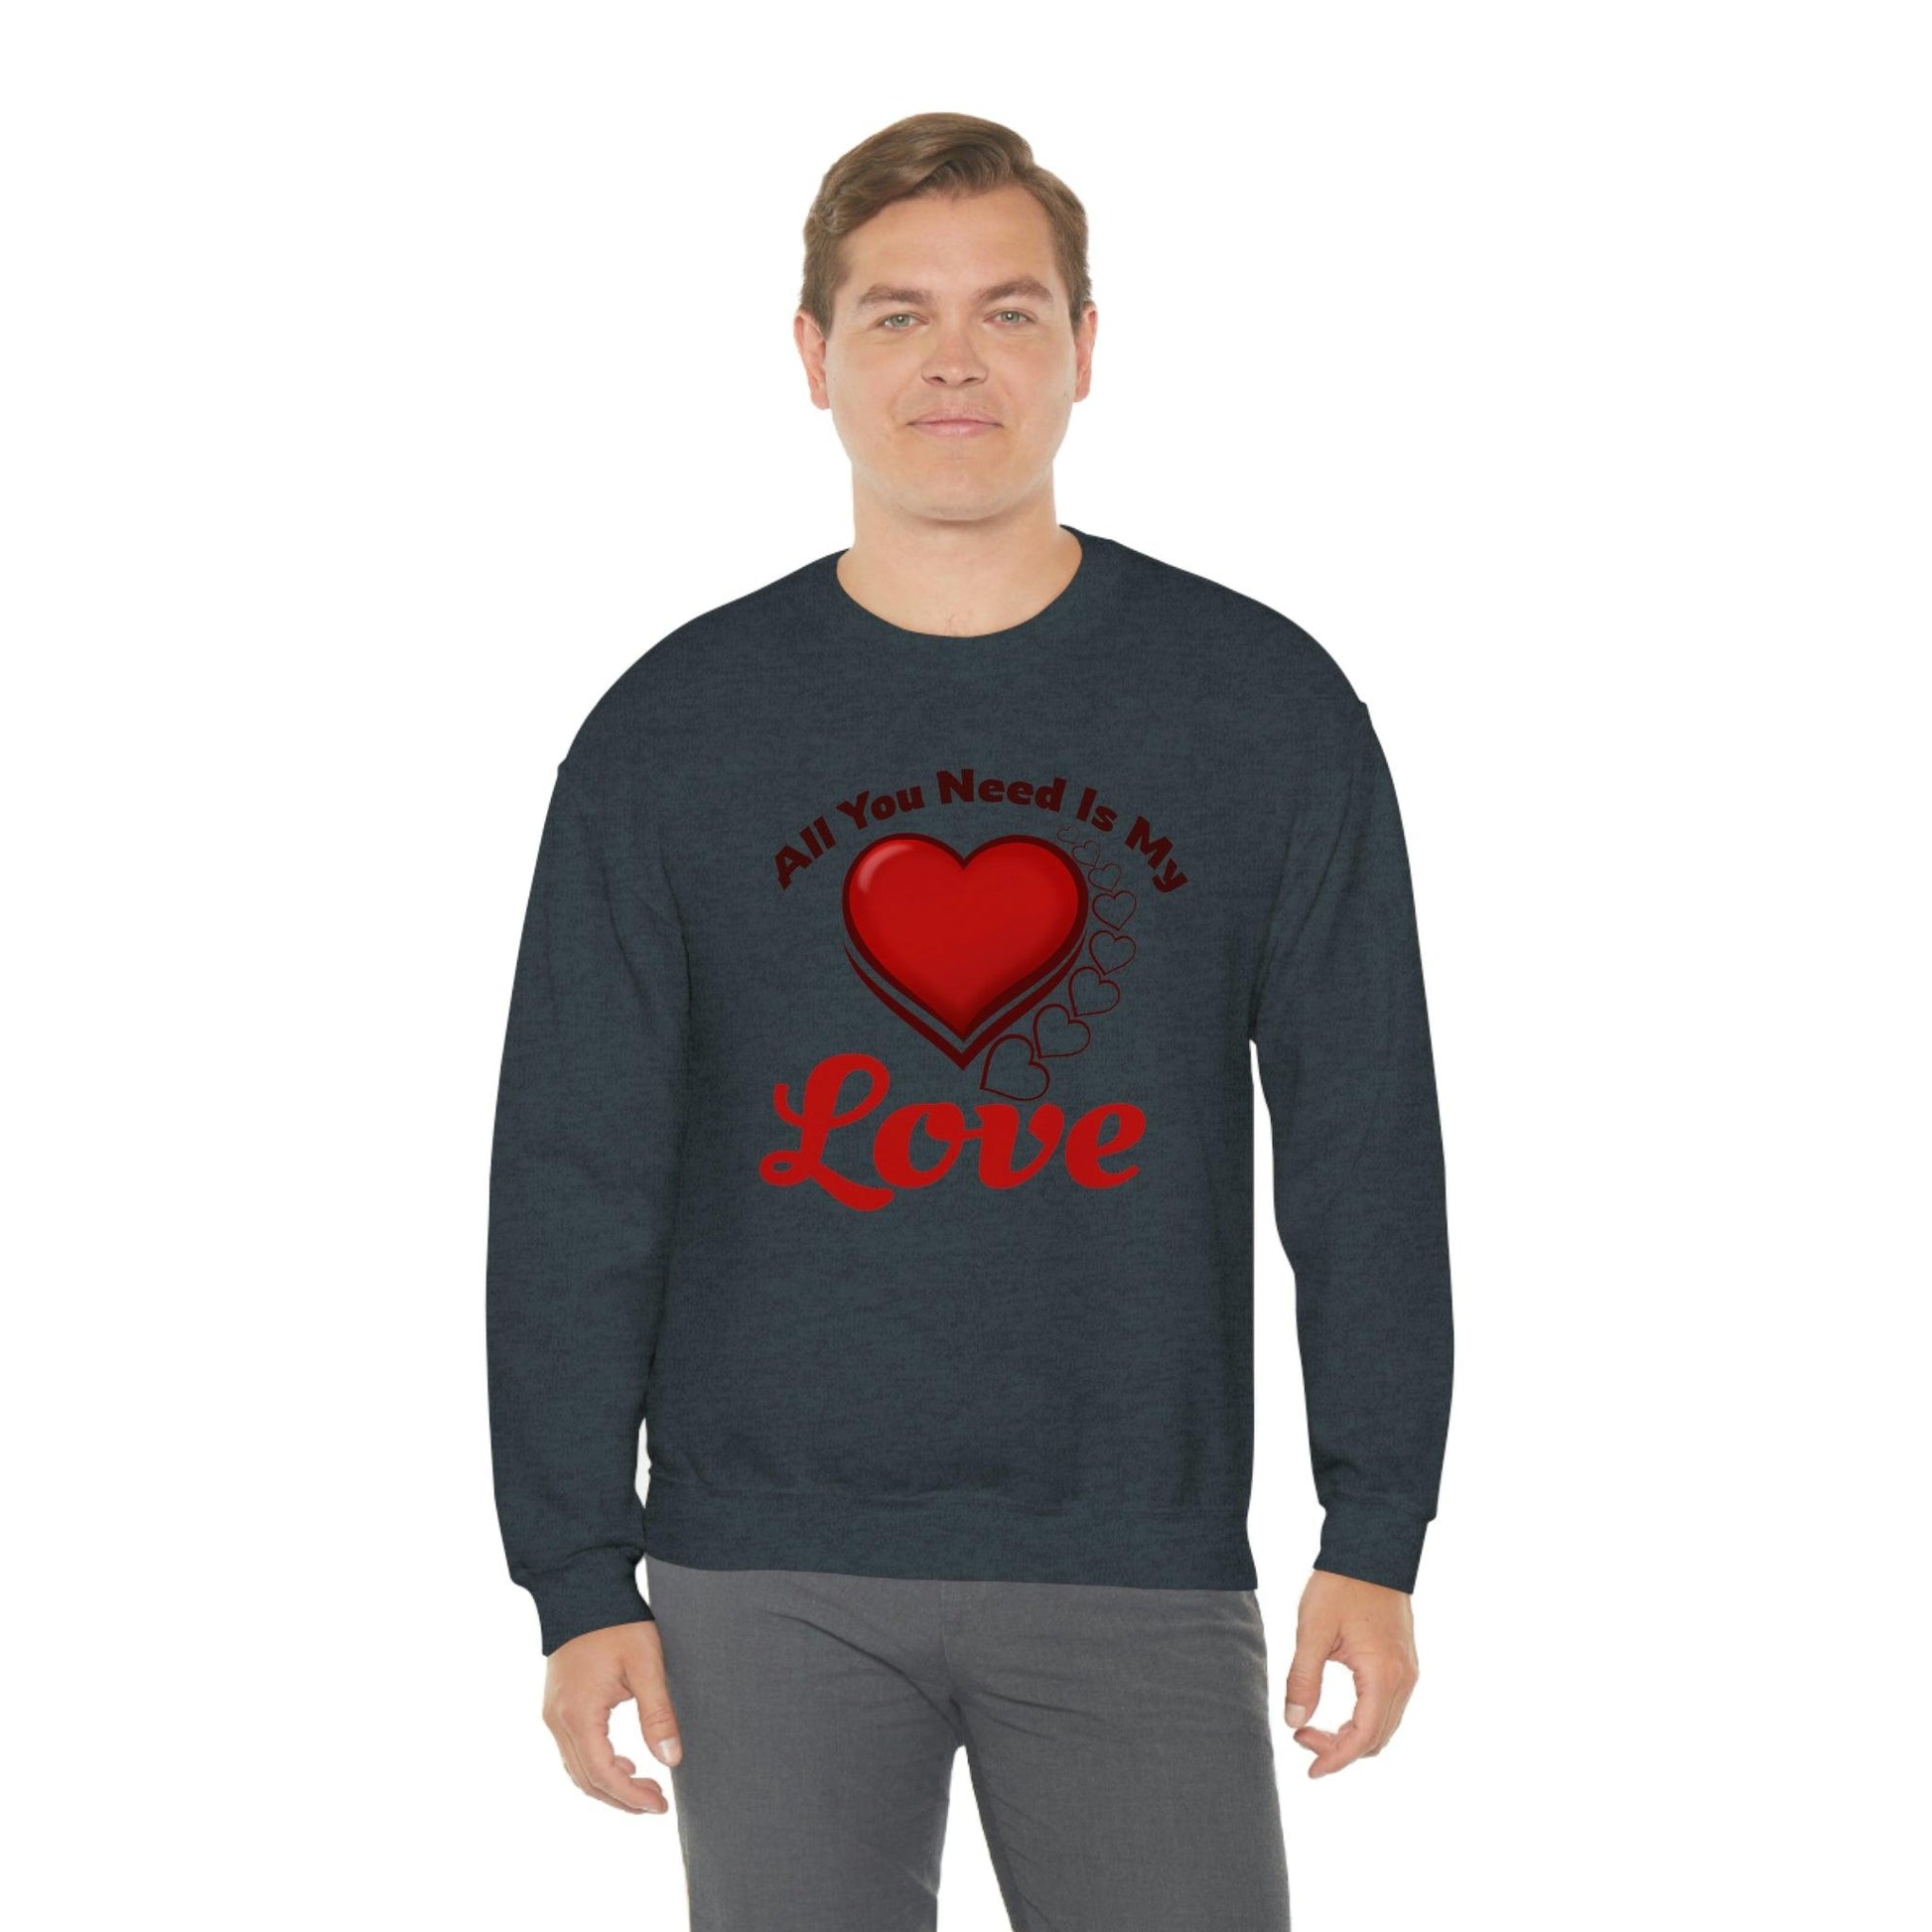 All you need is my Love Sweatshirt - Giftsmojo